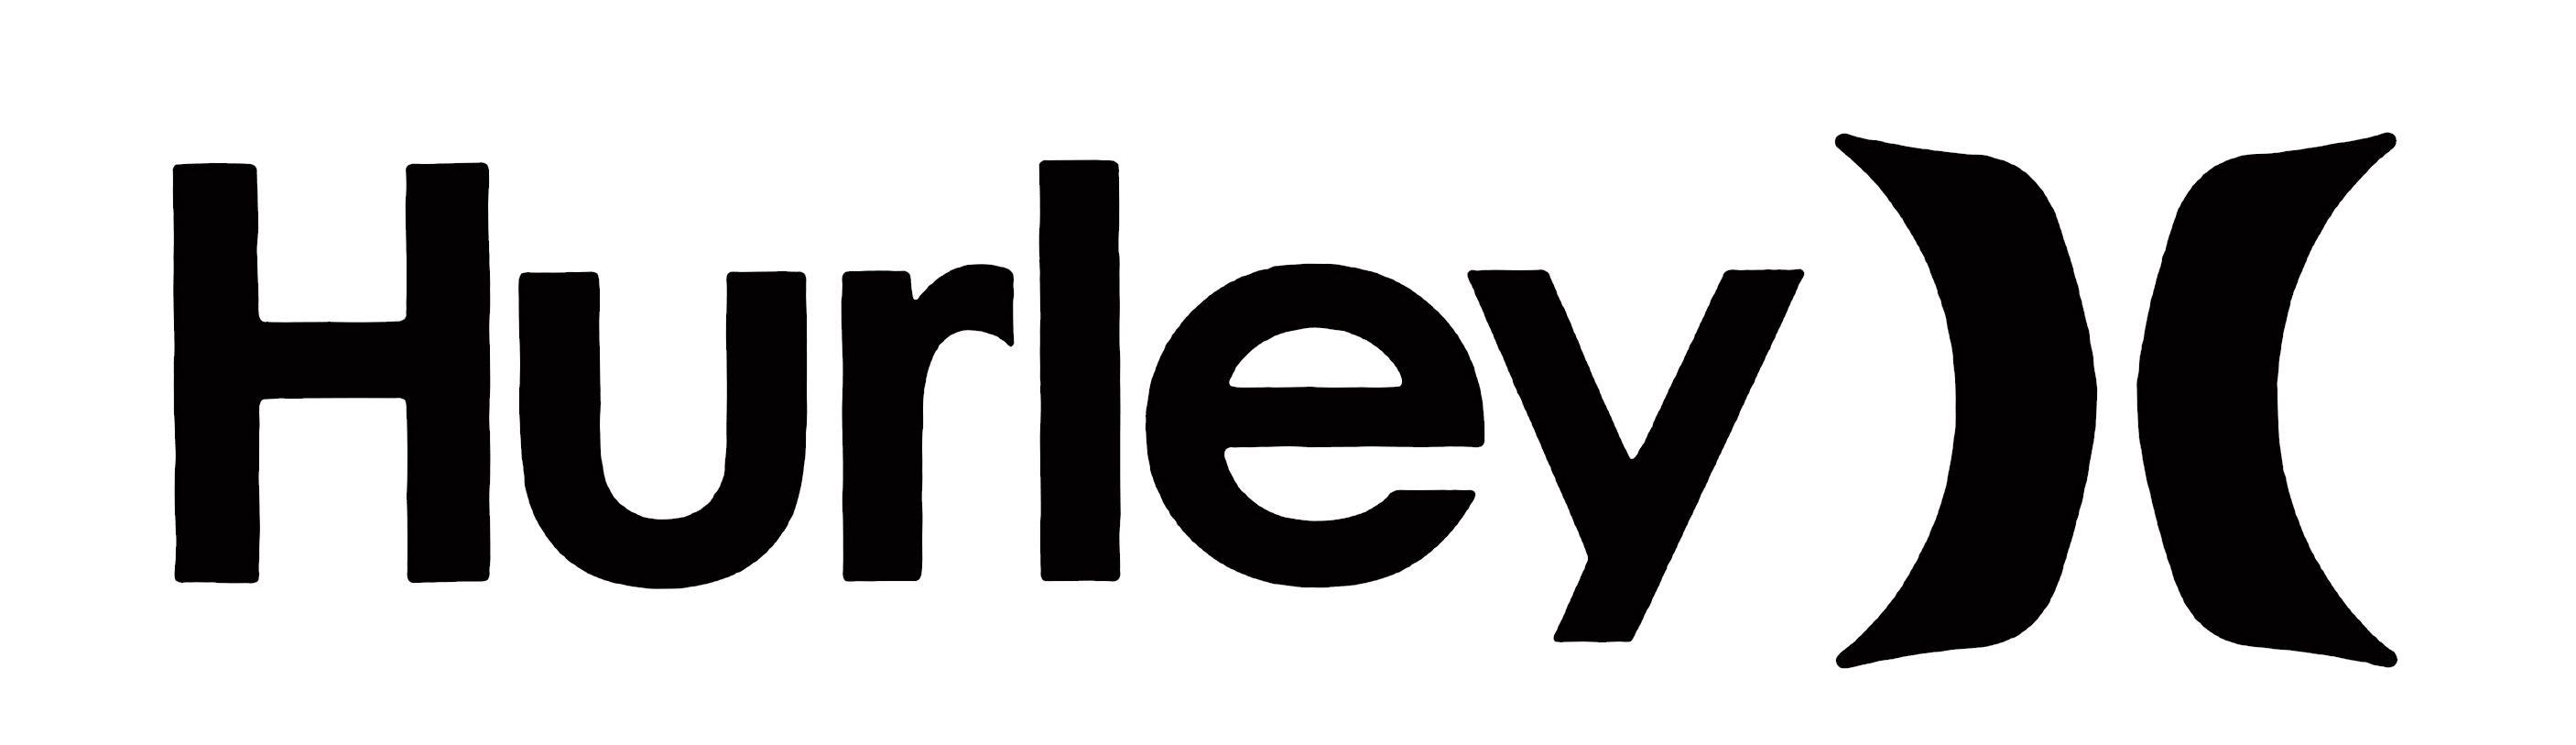 Hurley Logo - Pin by jay ricky on logos in 2019 | Logos, Hurley logo, Hurley